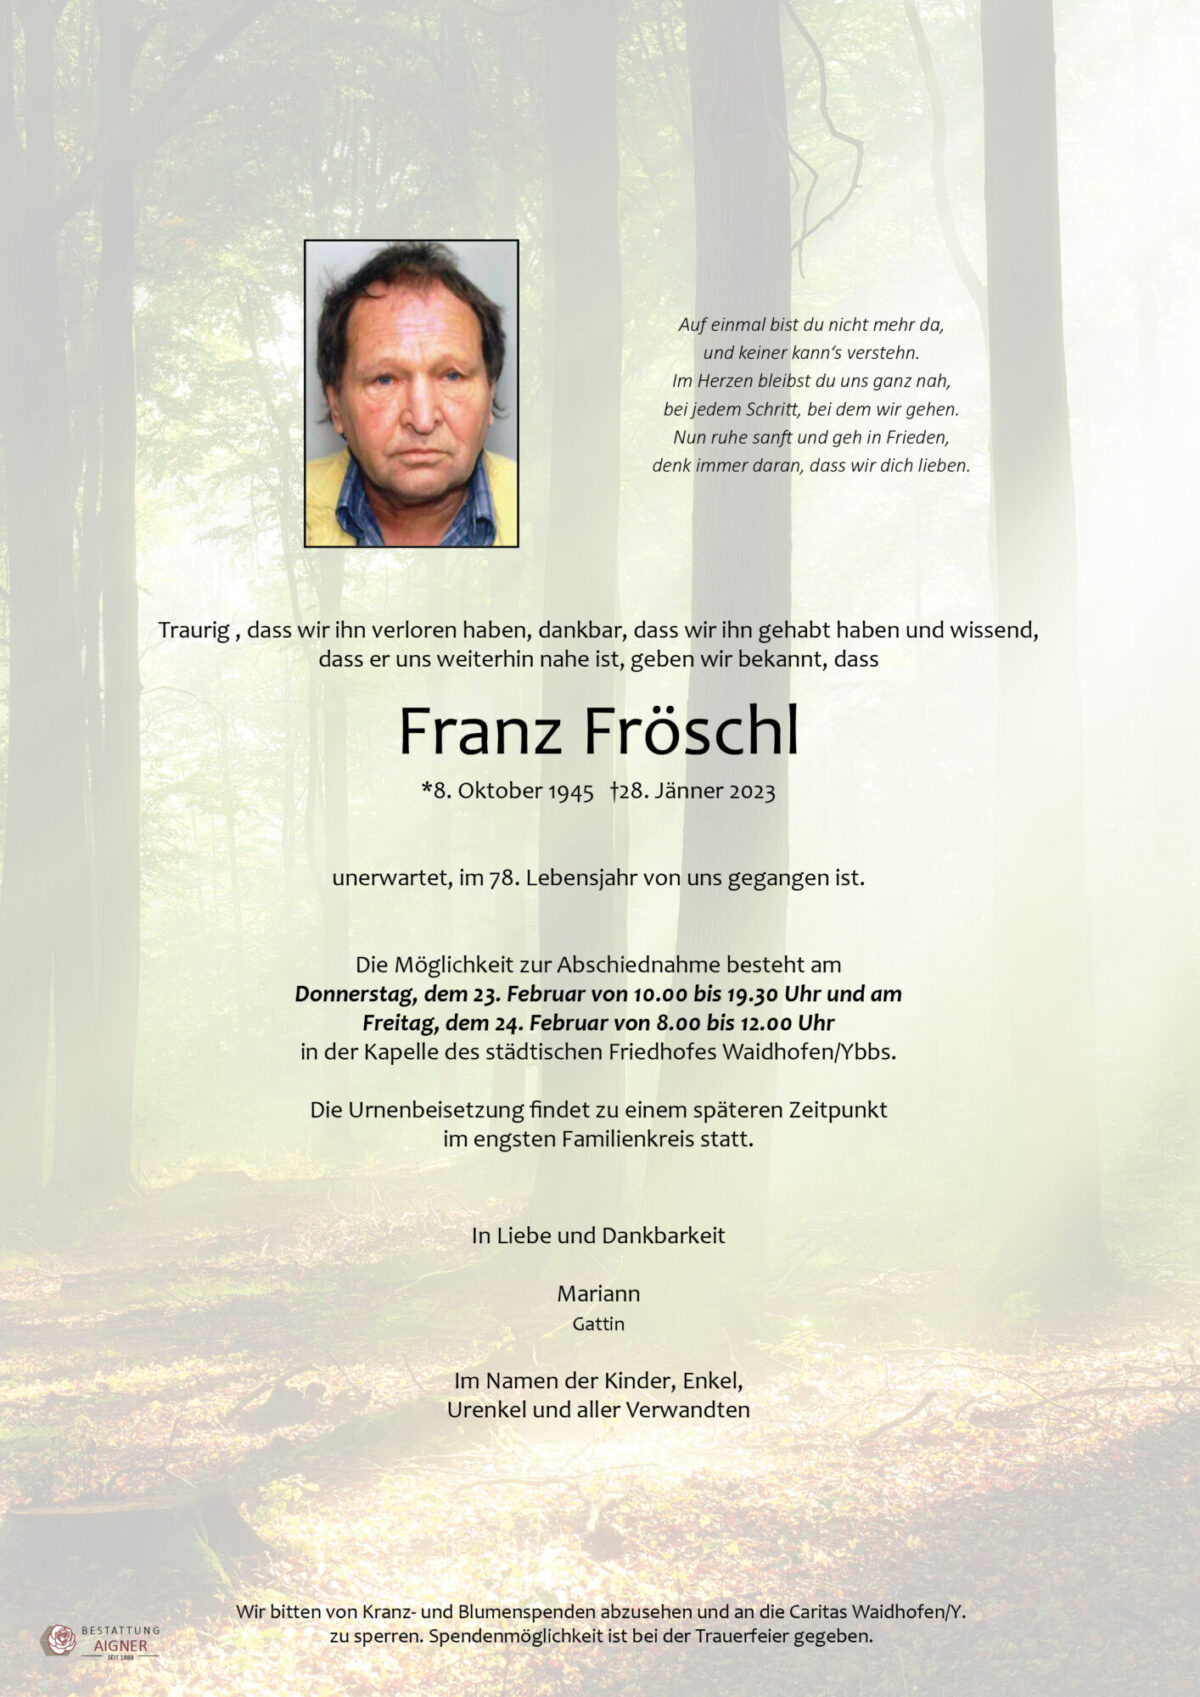 Franz Fröschl